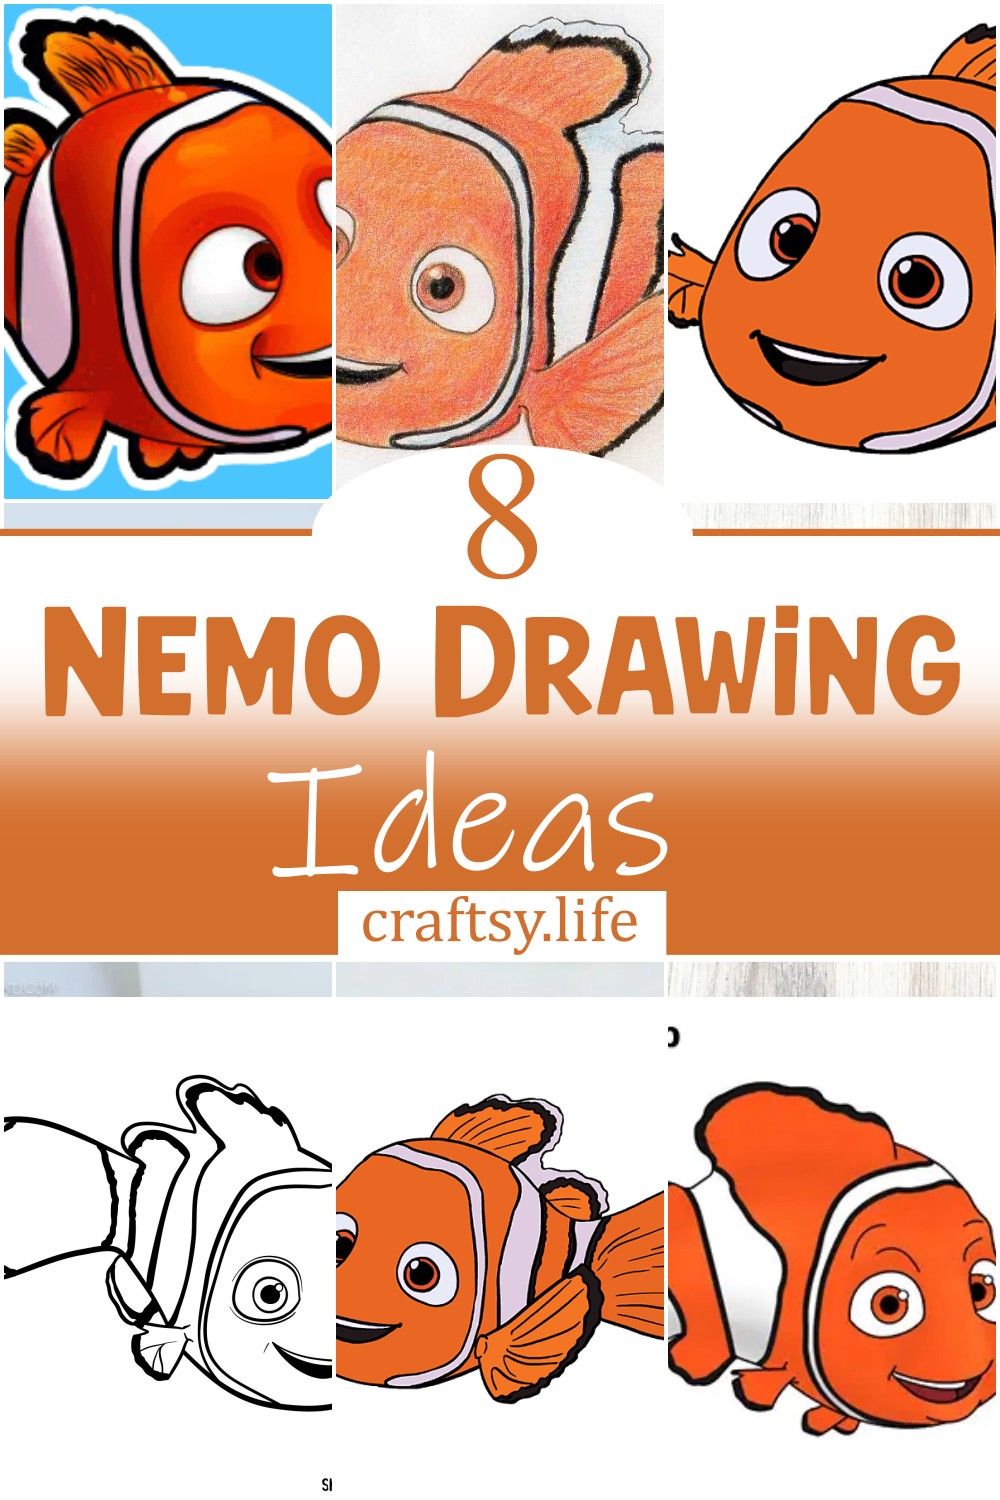 8 Nemo Drawing Ideas